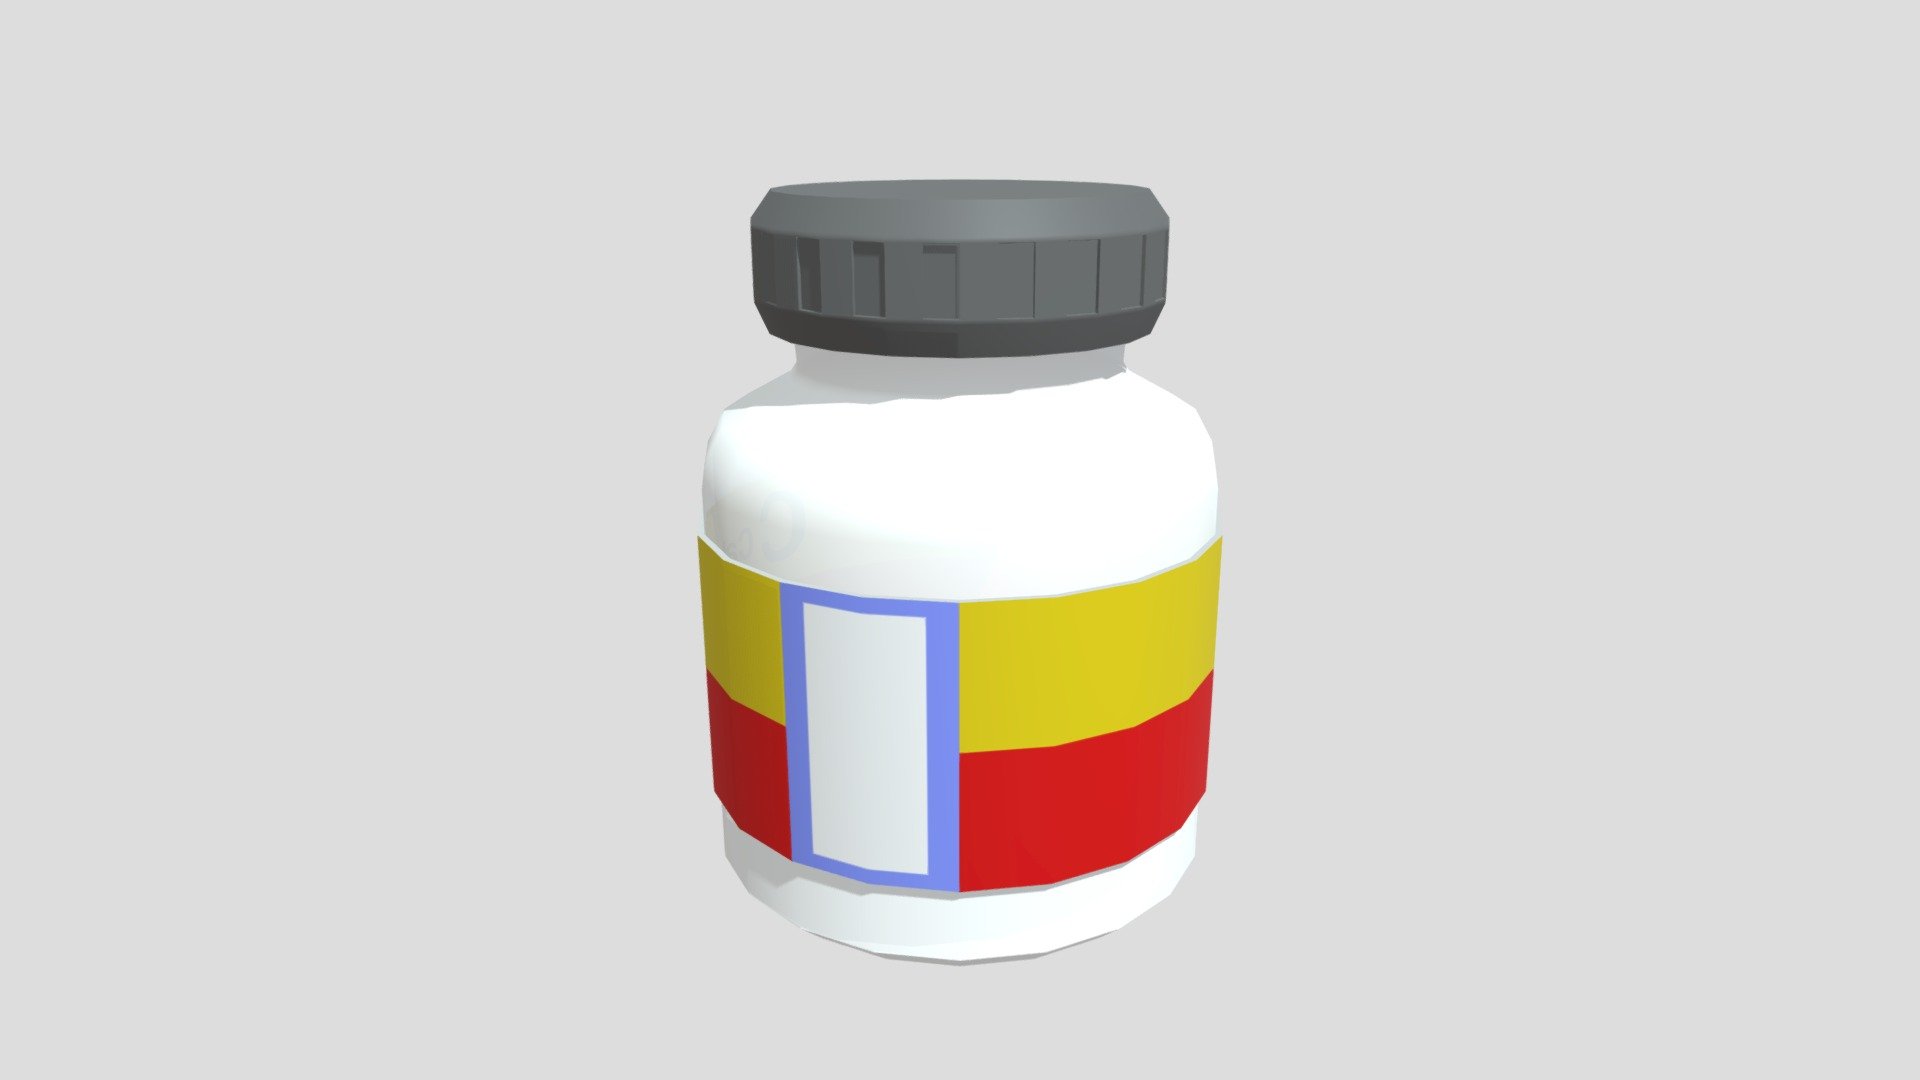 Just a simple medicine packaging.

Verts: 542
Edges: 1080
Faces: 540
Tris: 1080
UVs: 1130 - Medicine packging 3d model